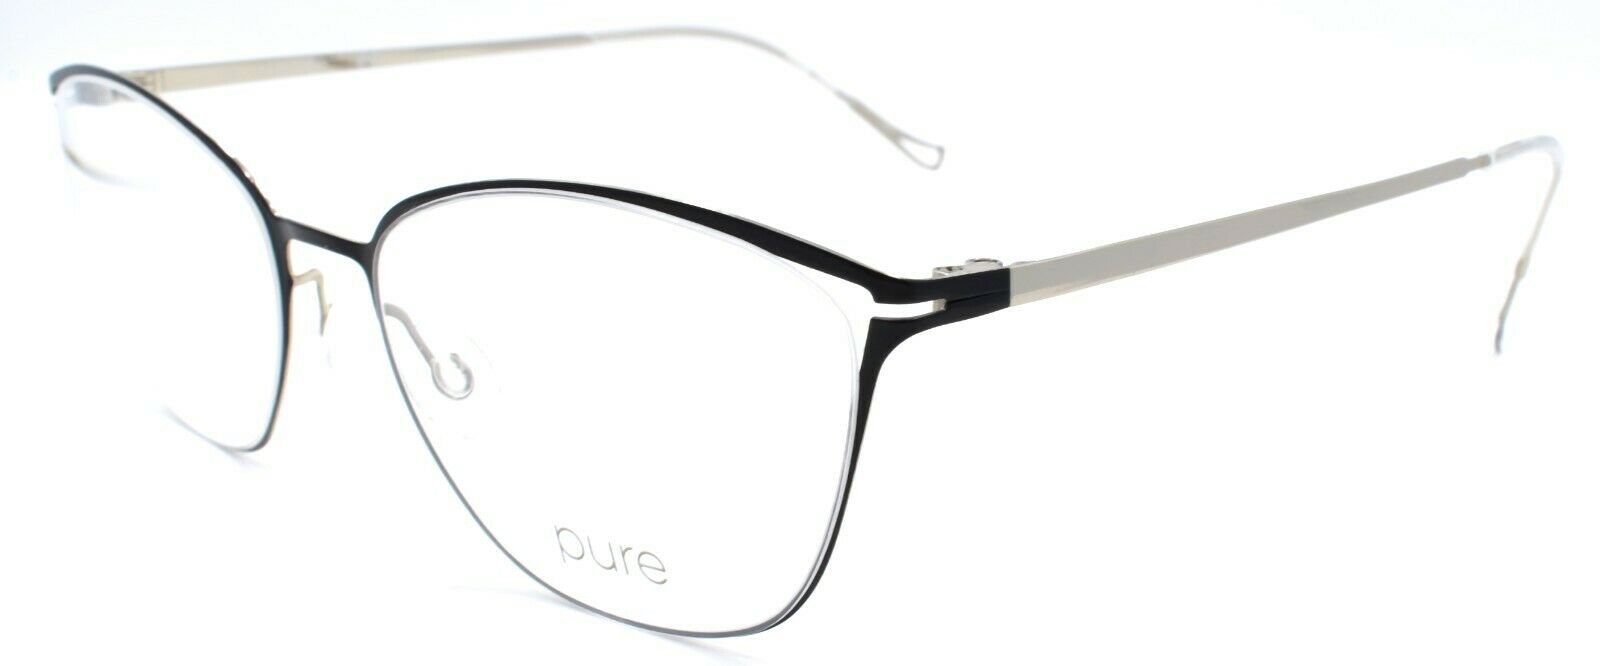 1-Airlock 5002 001 Women's Eyeglasses Frames Titanium 52-17-140 Black-886895451246-IKSpecs